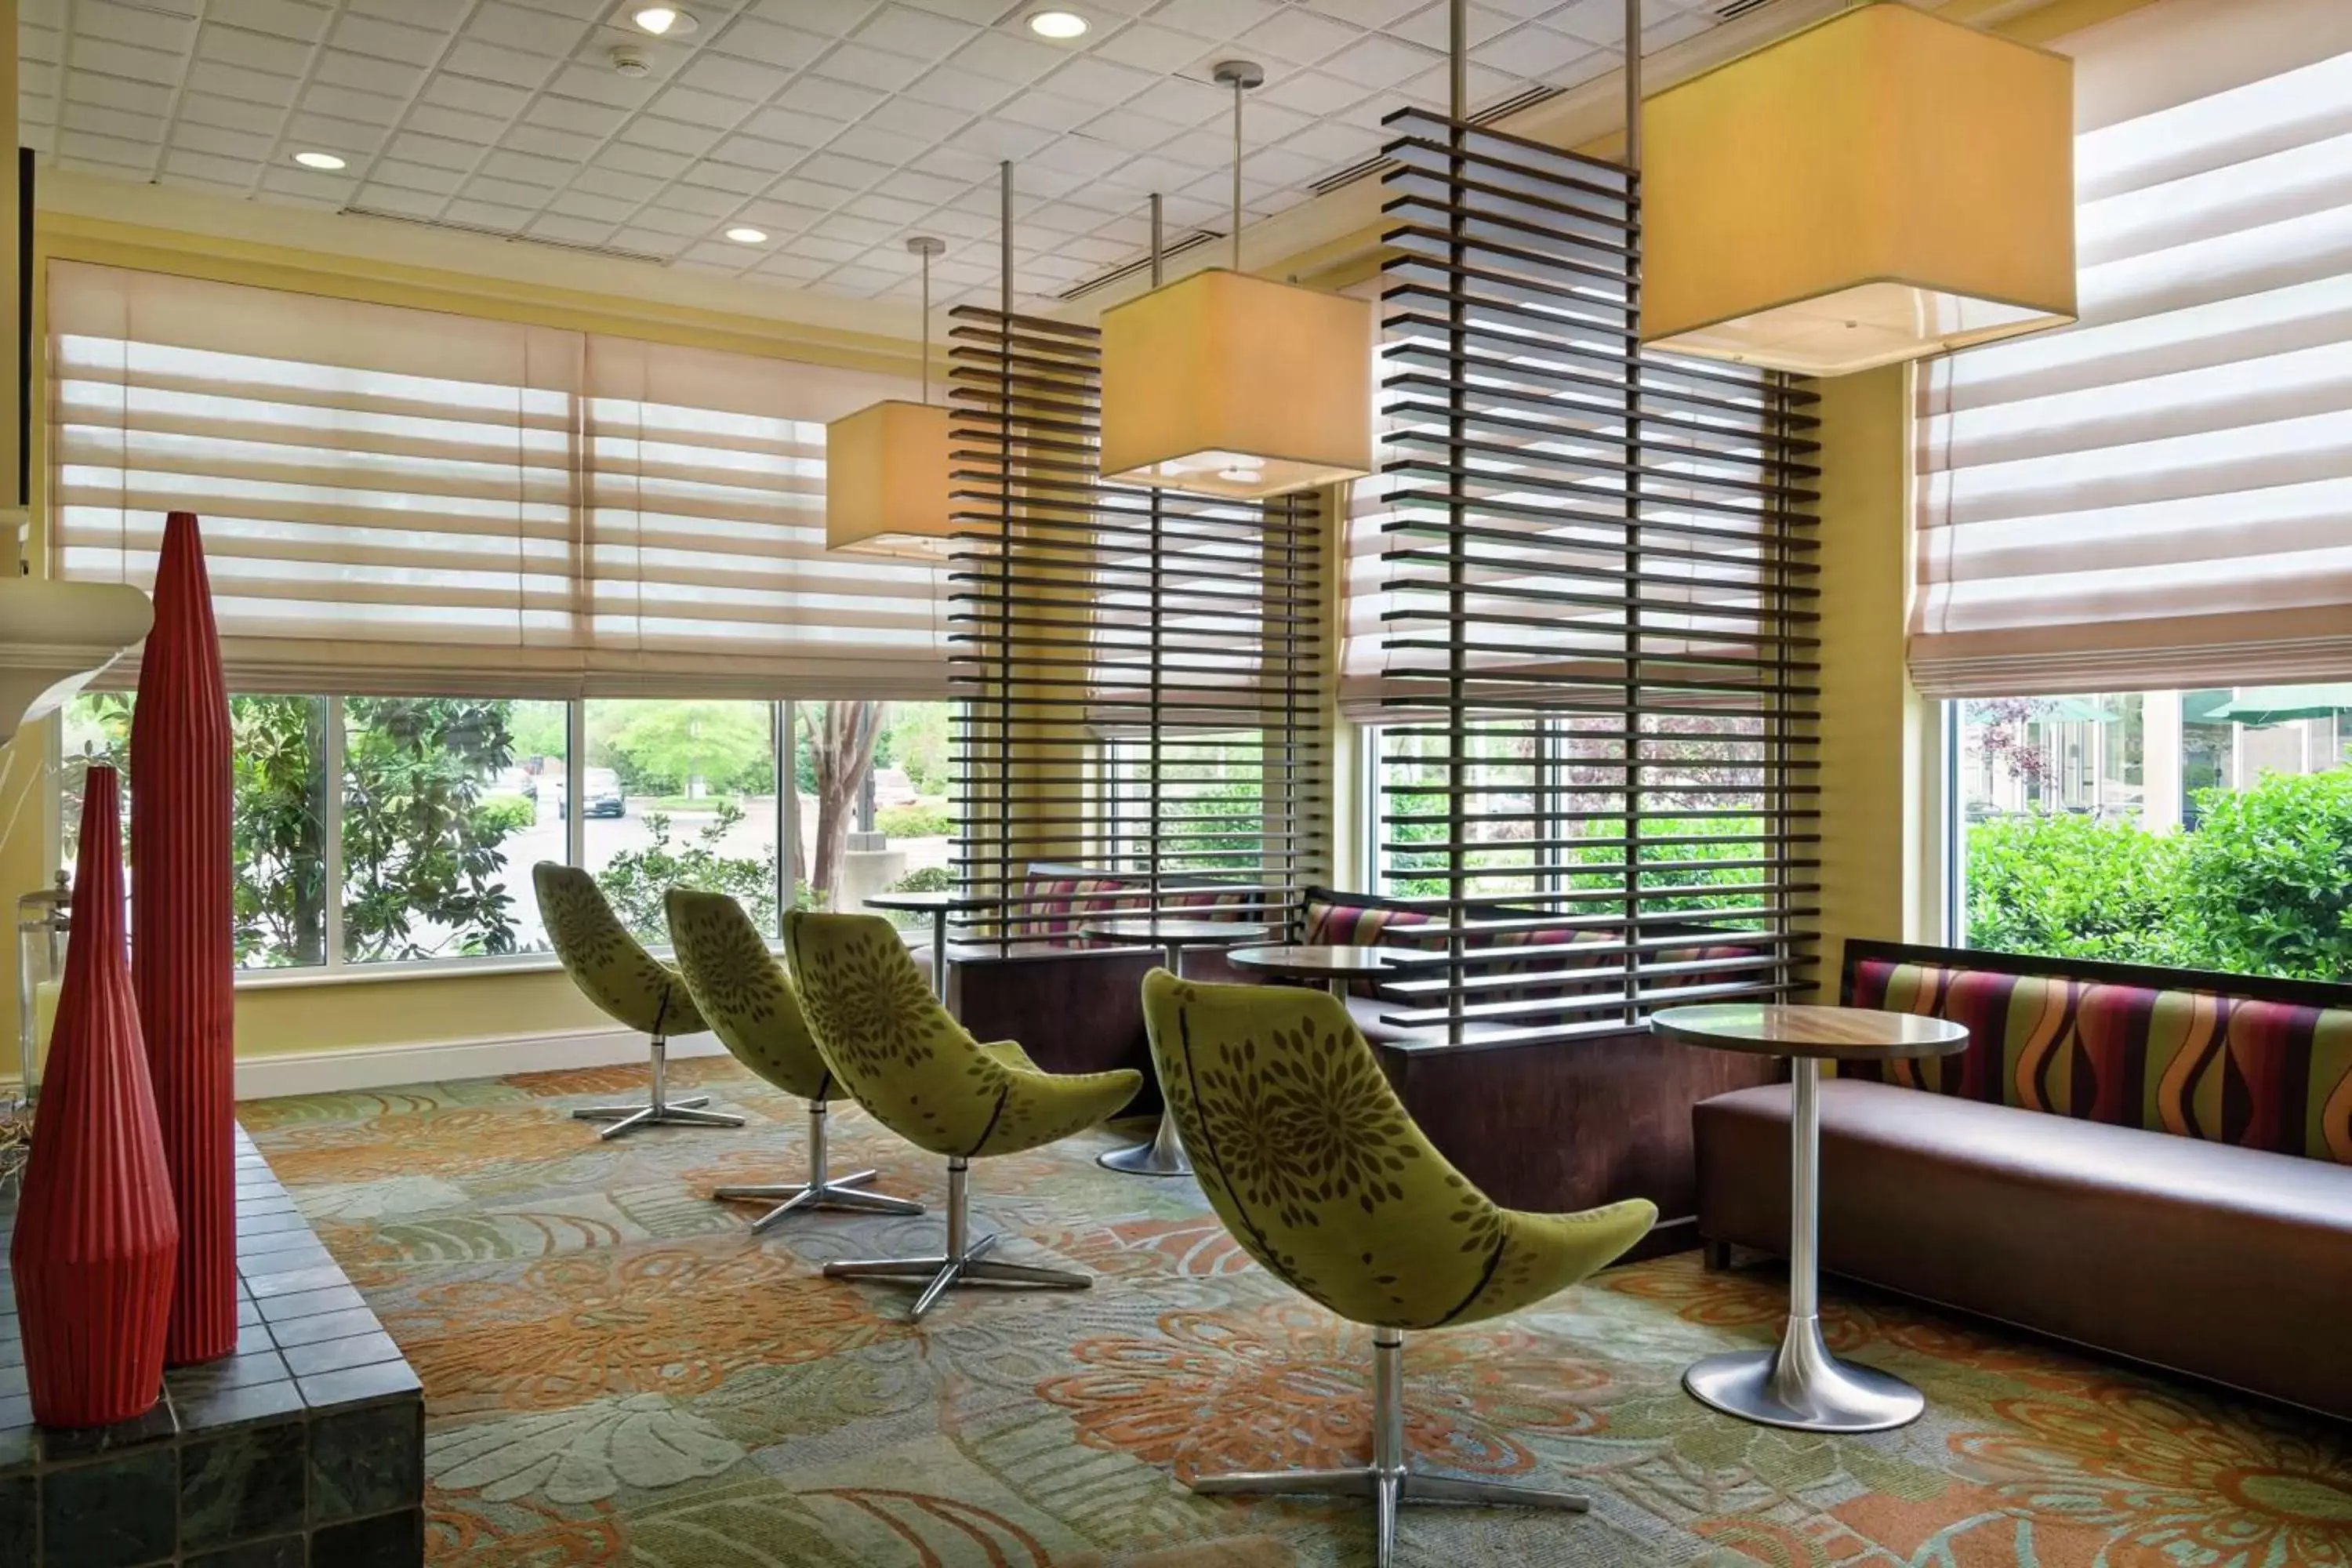 Lobby or reception in Hilton Garden Inn Newport News